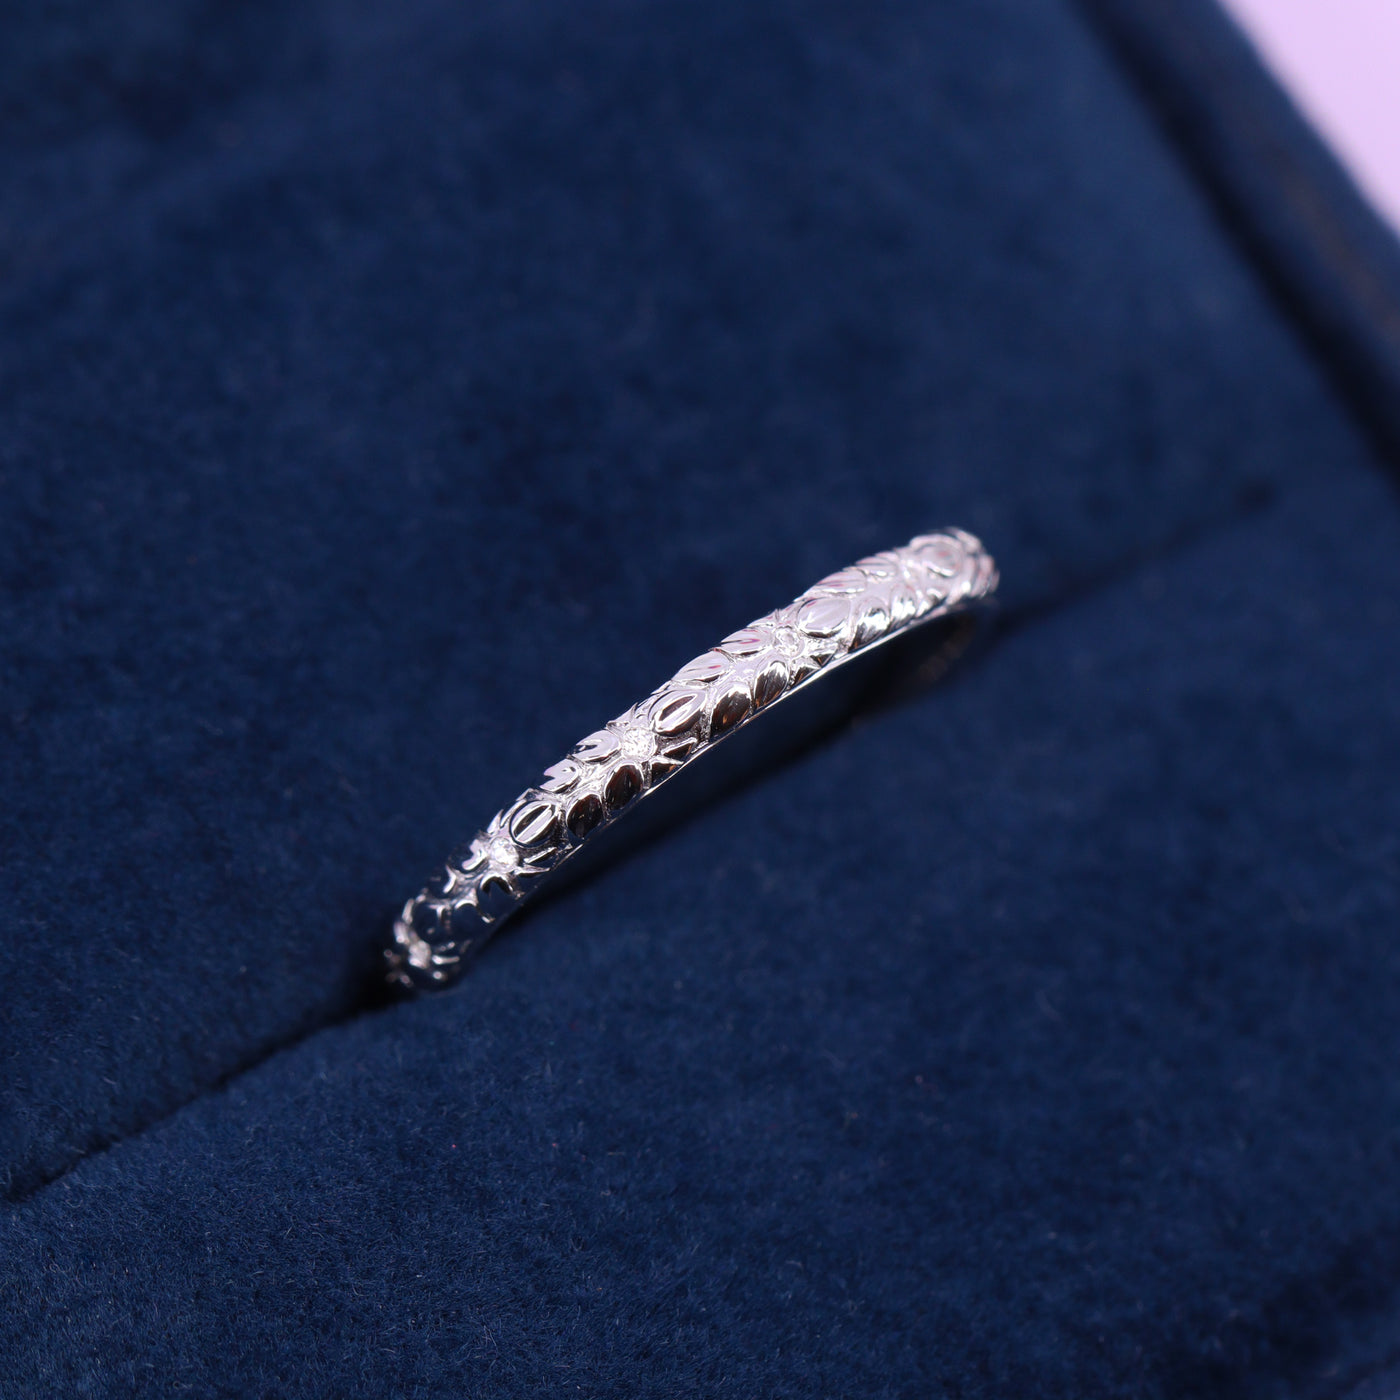 Bethan - Vintage Style Patterned Diamond Set Full Eternity Wedding Band - Made to Order